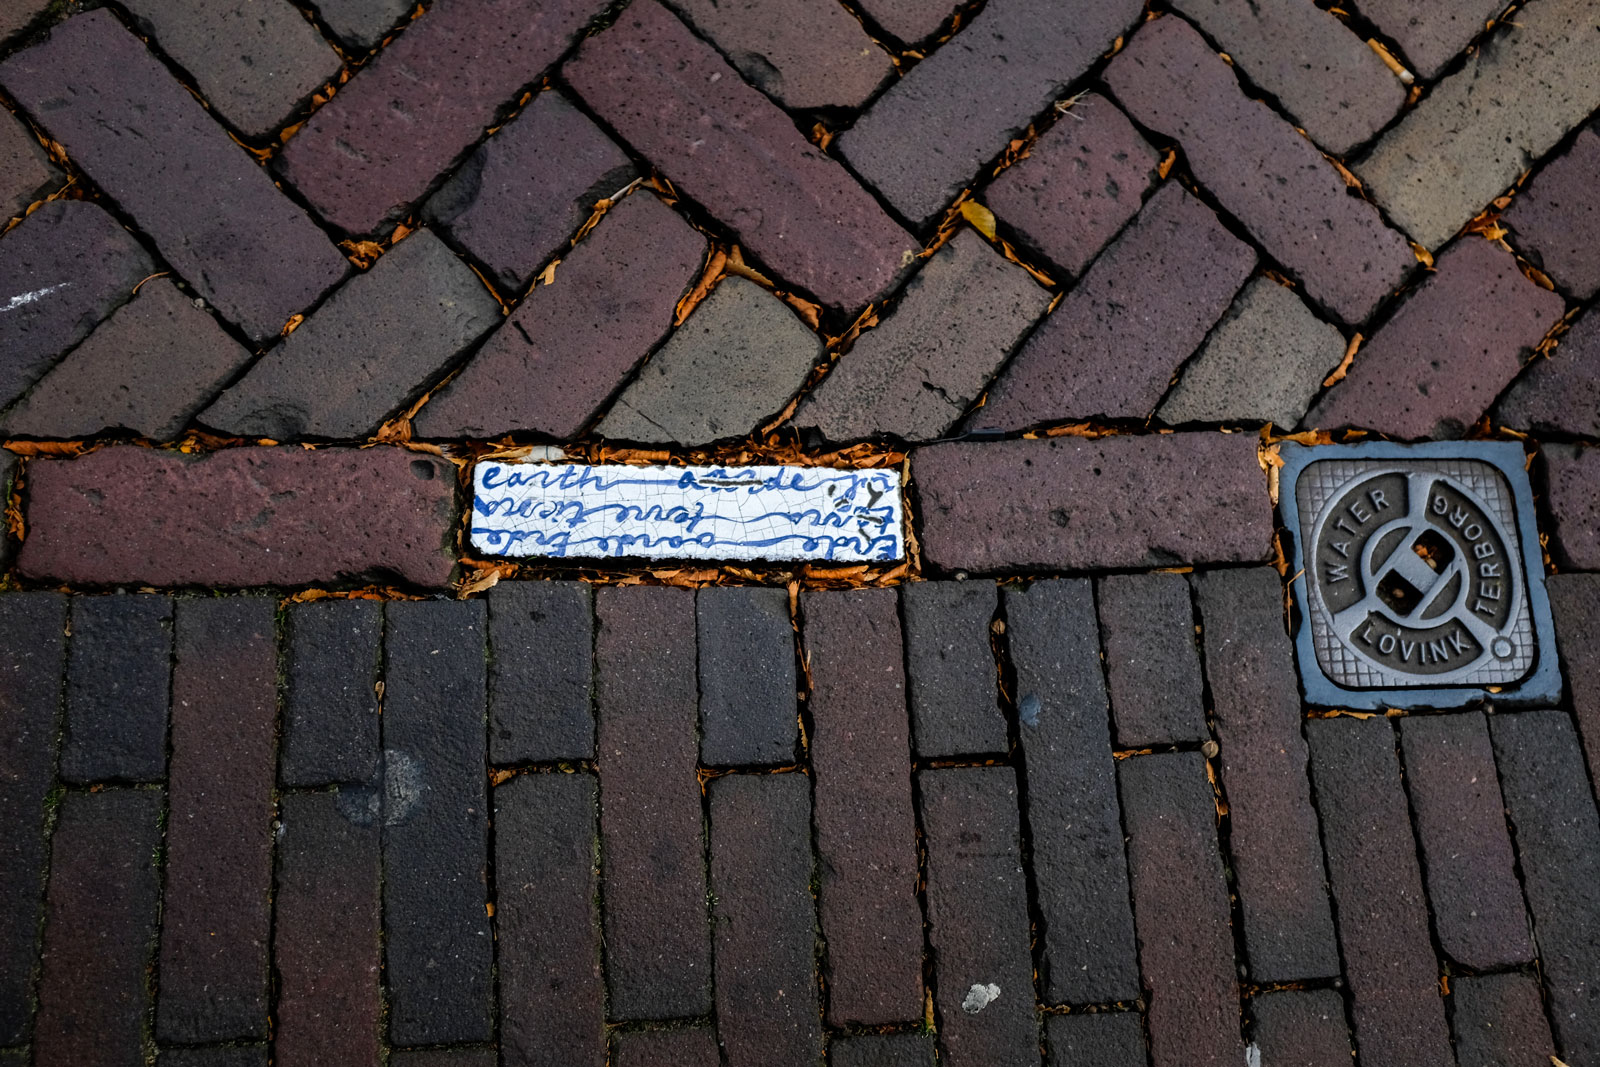 A porcelain brick in Delft